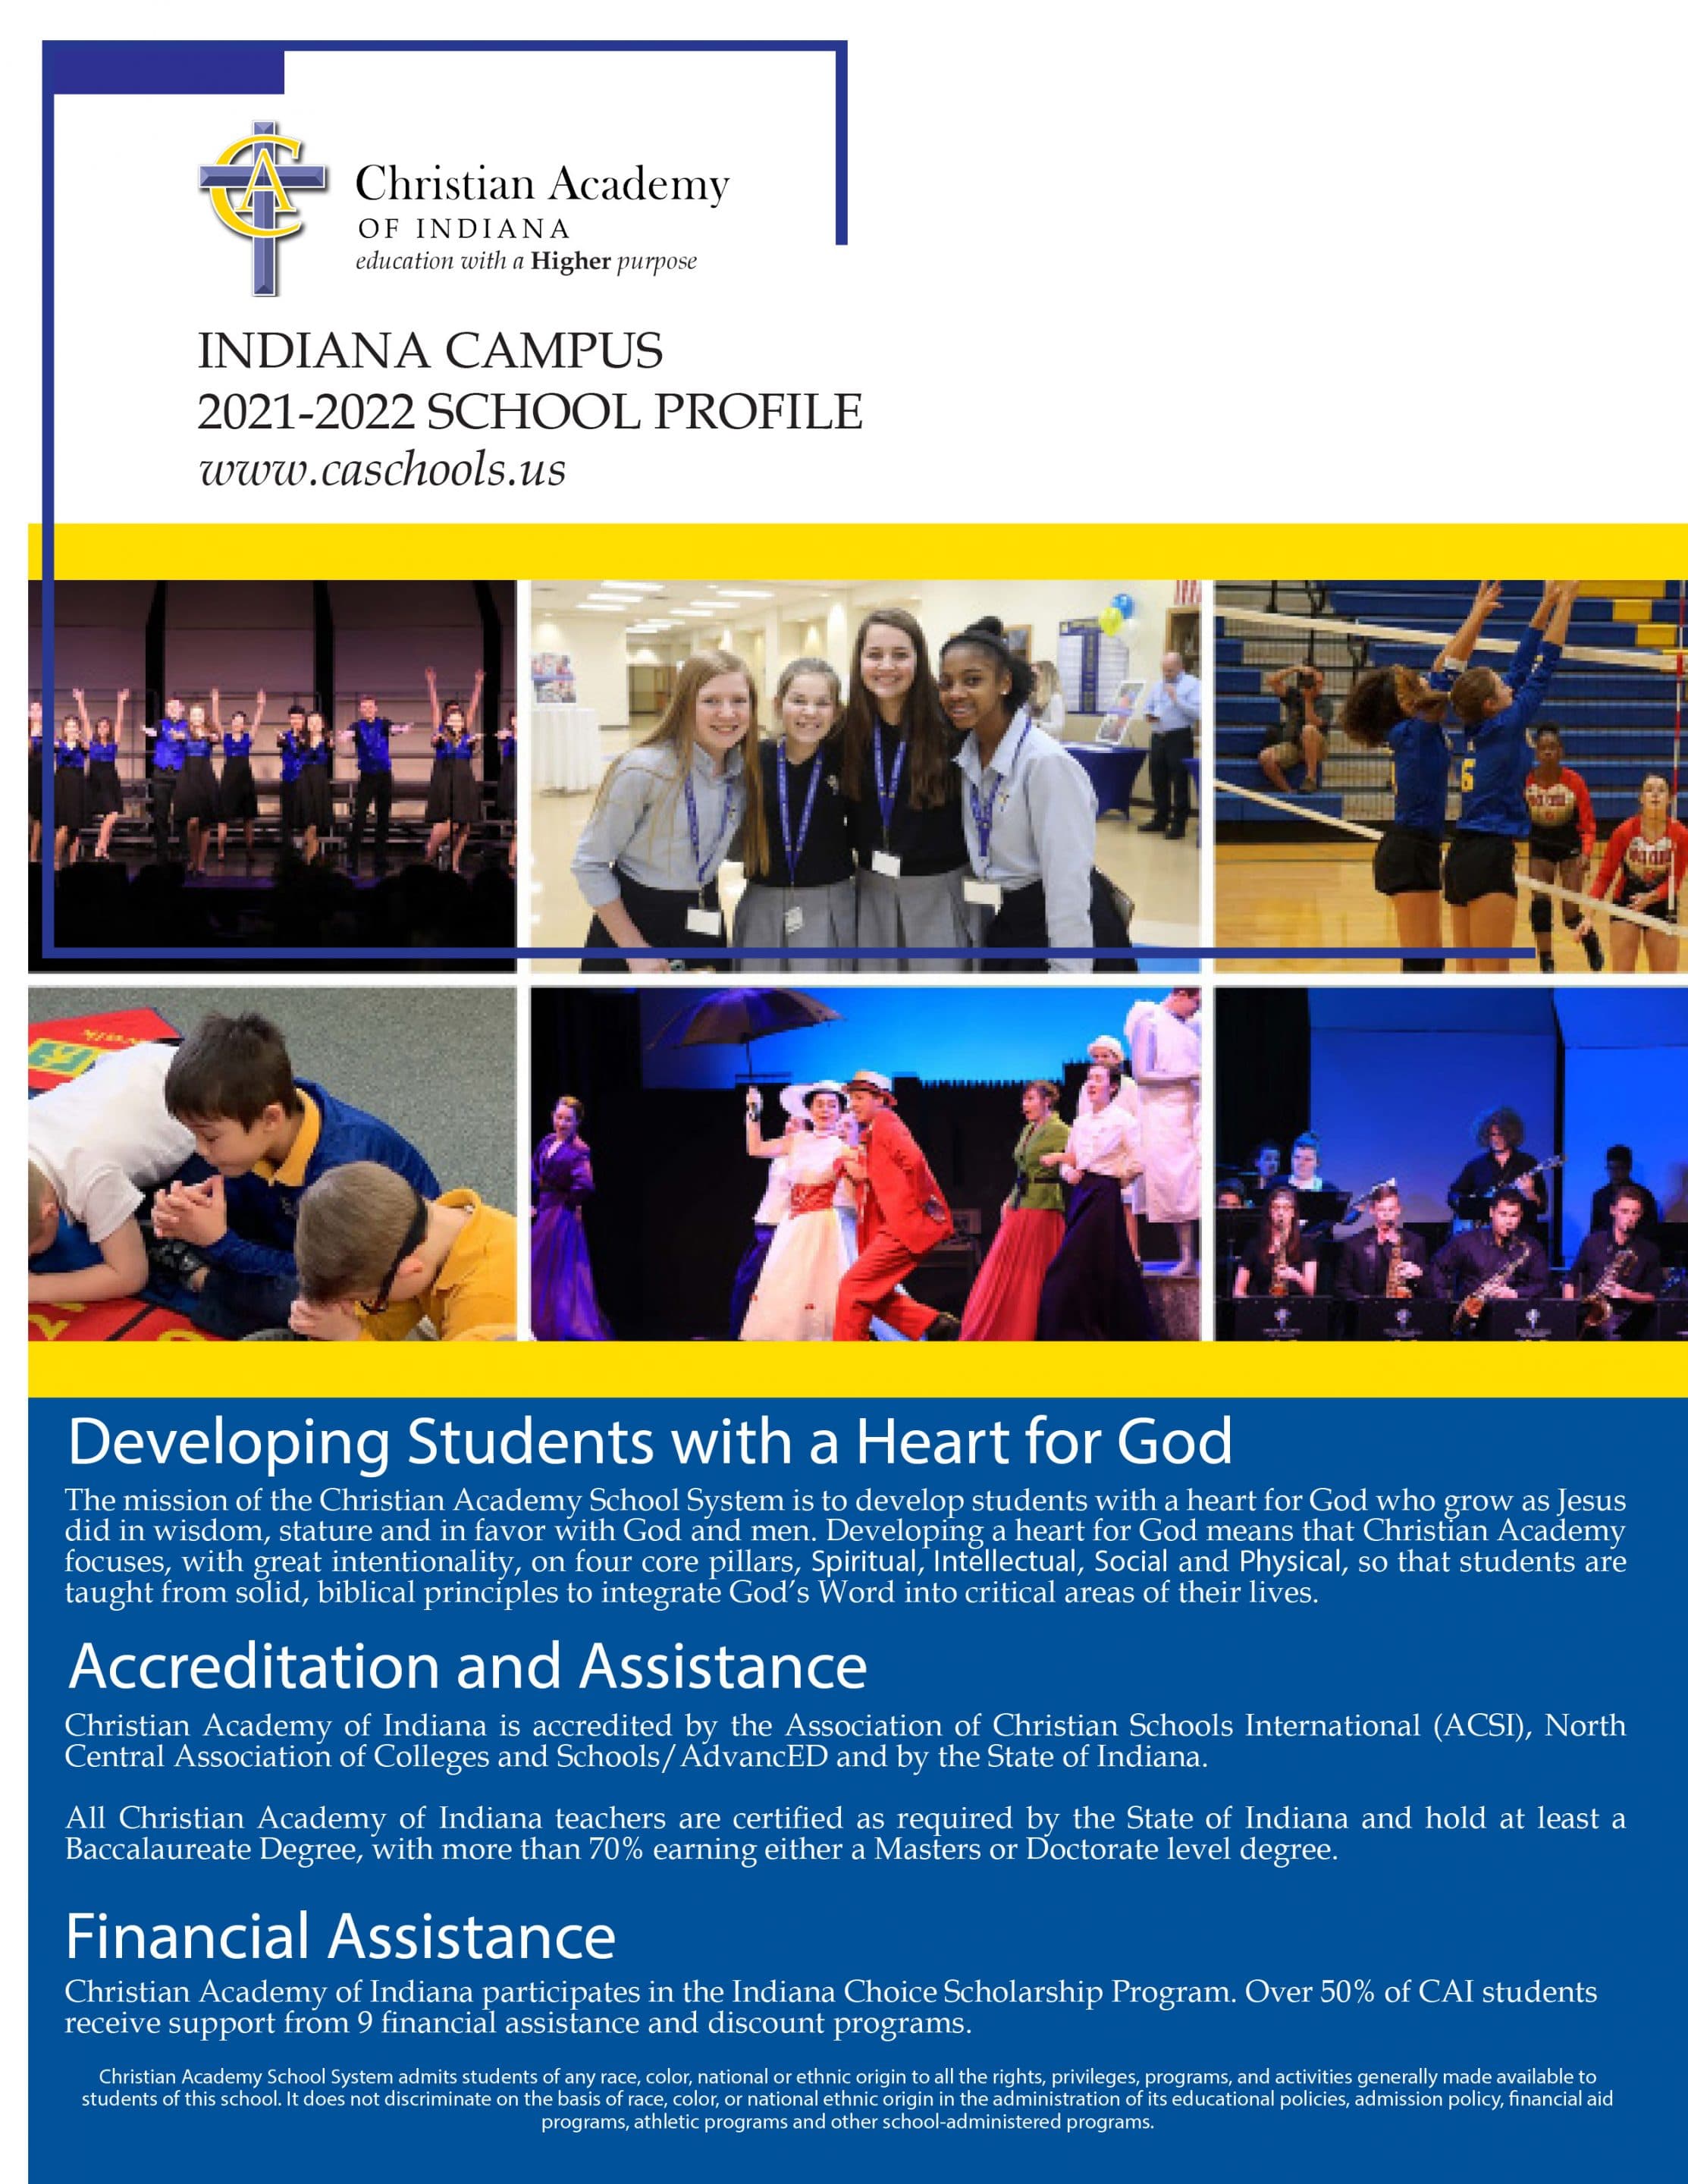 Christian Academy School System | Christian Academy of Indiana | 2021-2022 School Profile